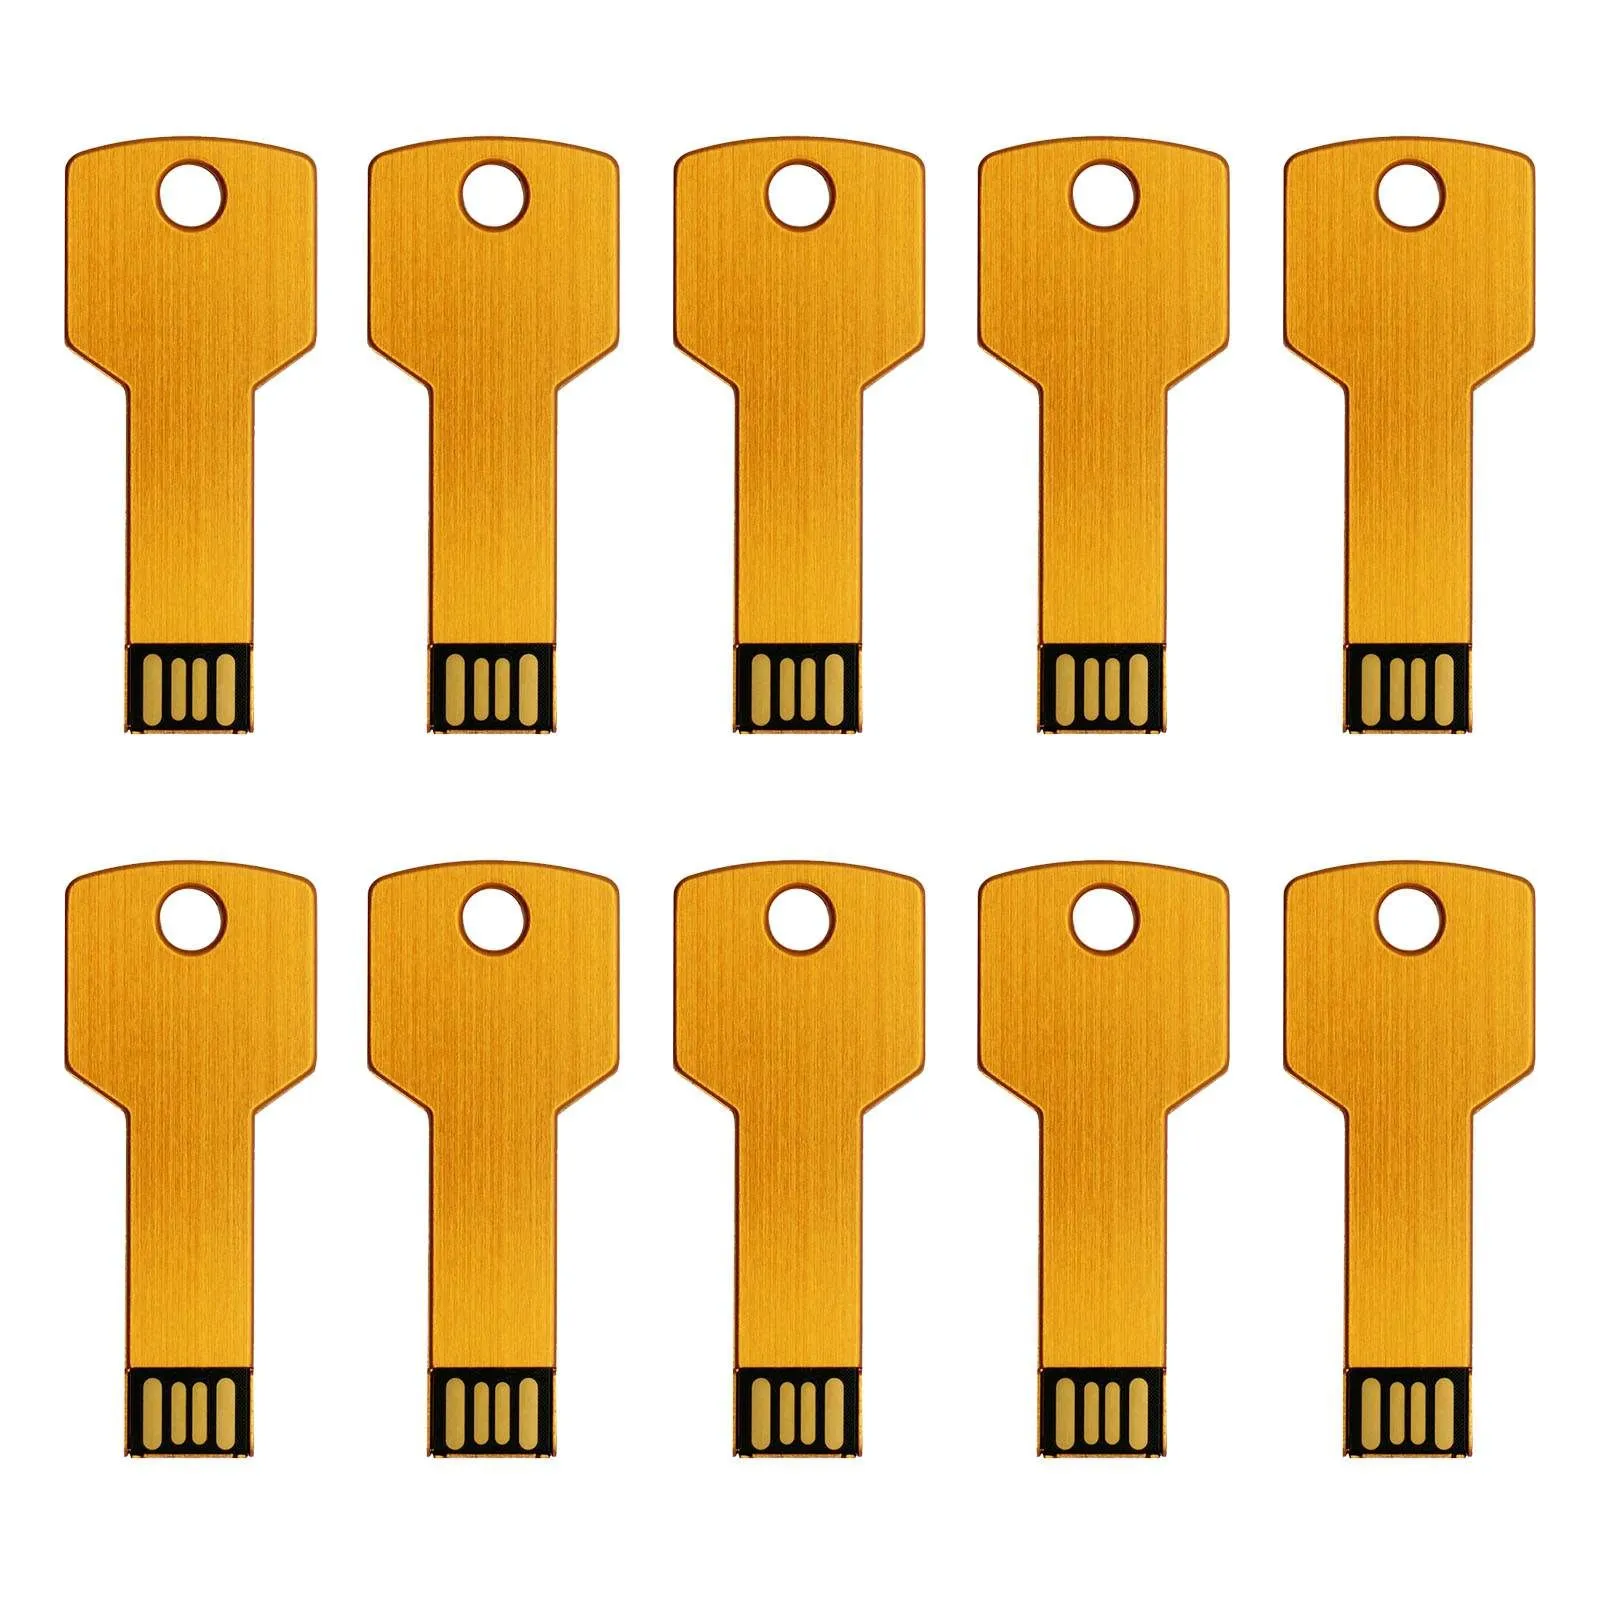 Jboxing Gold Metal Key 32GB USB 20 Flash Drives 32gb Flash Pen Drive Thumb Storage Enough Memory Stick for PC Laptop Macbook